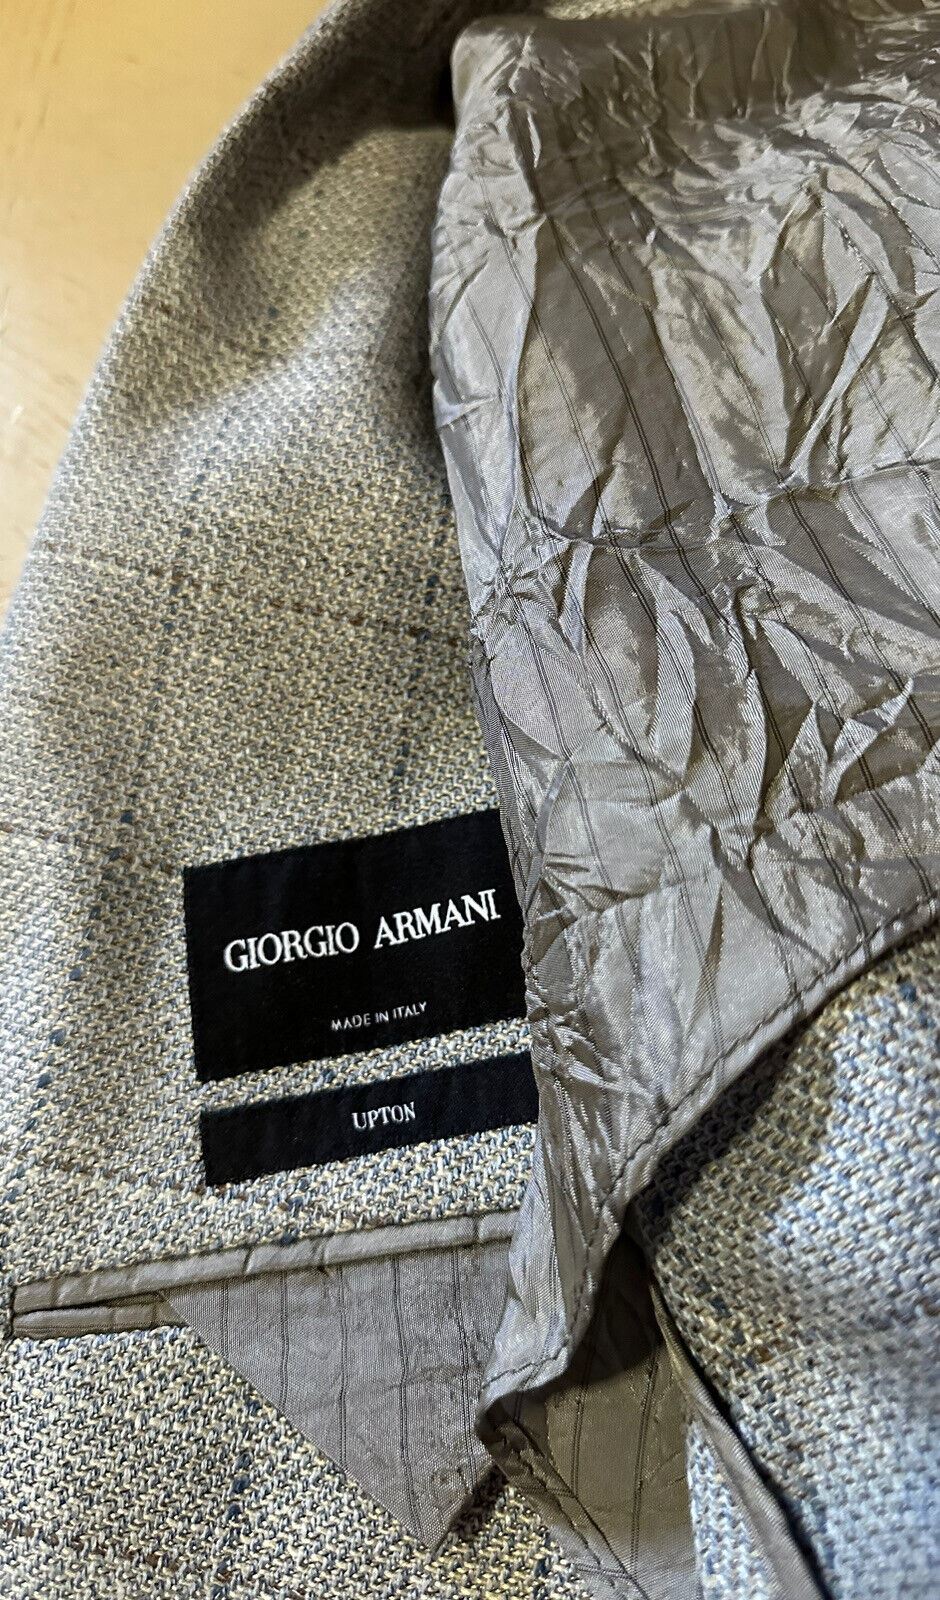 СЗТ $2995 Giorgio Armani Мужская спортивная куртка Блейзер Серый 46R США/56R ЕС Италия